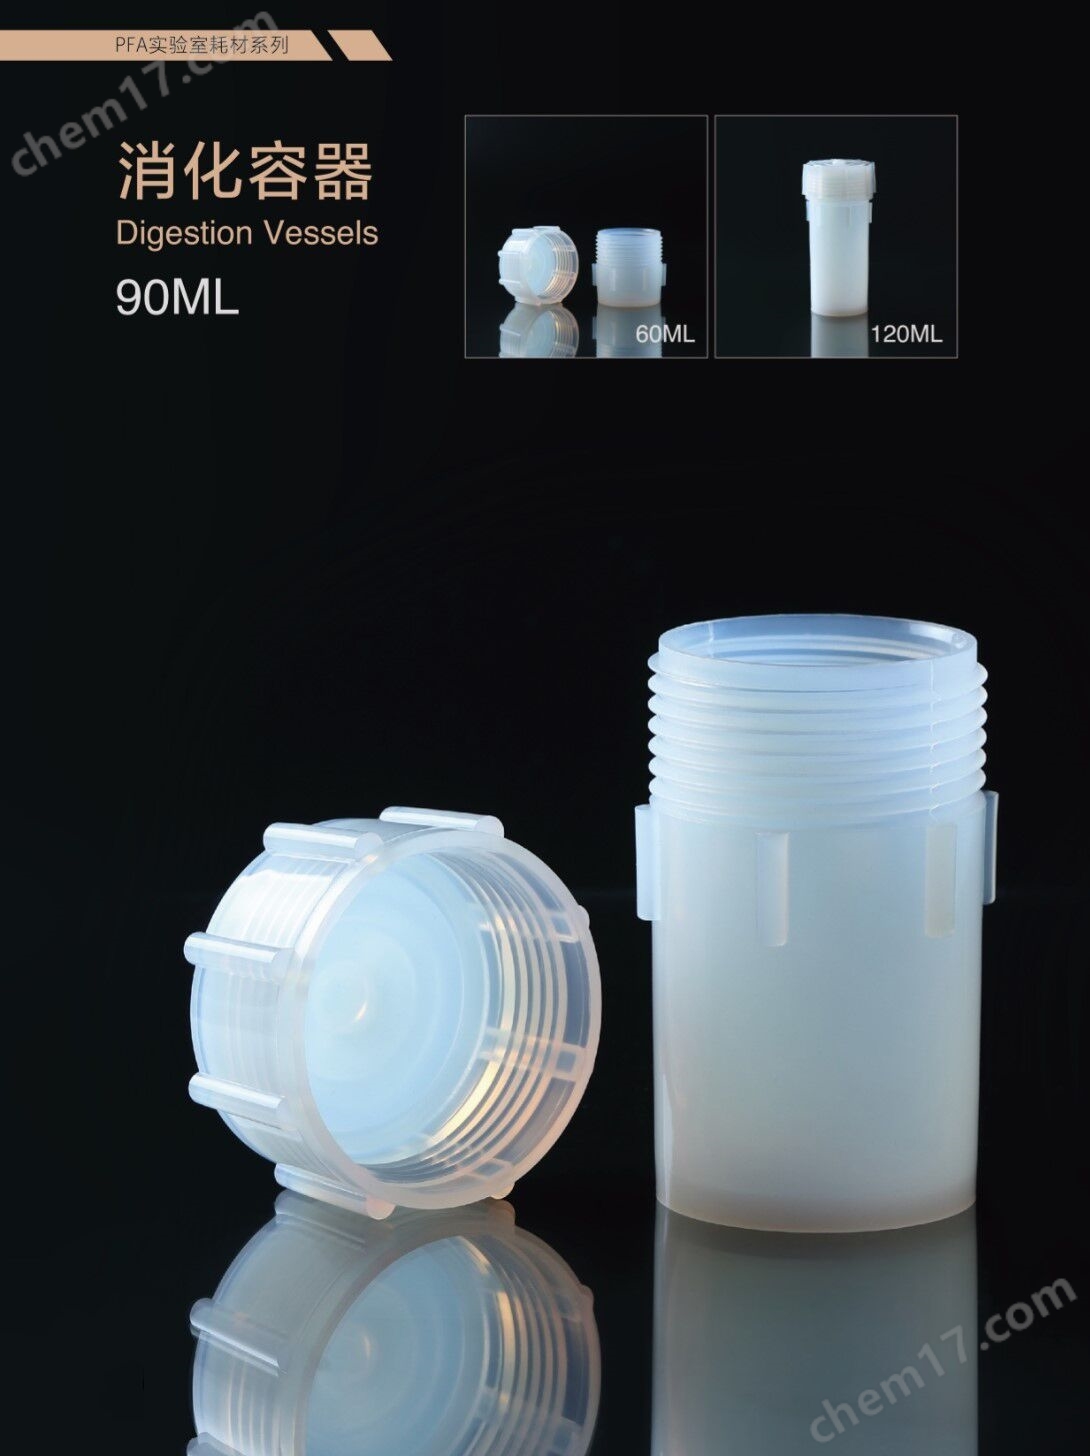 PFA-消化容器消化容器-wako富士胶片和光